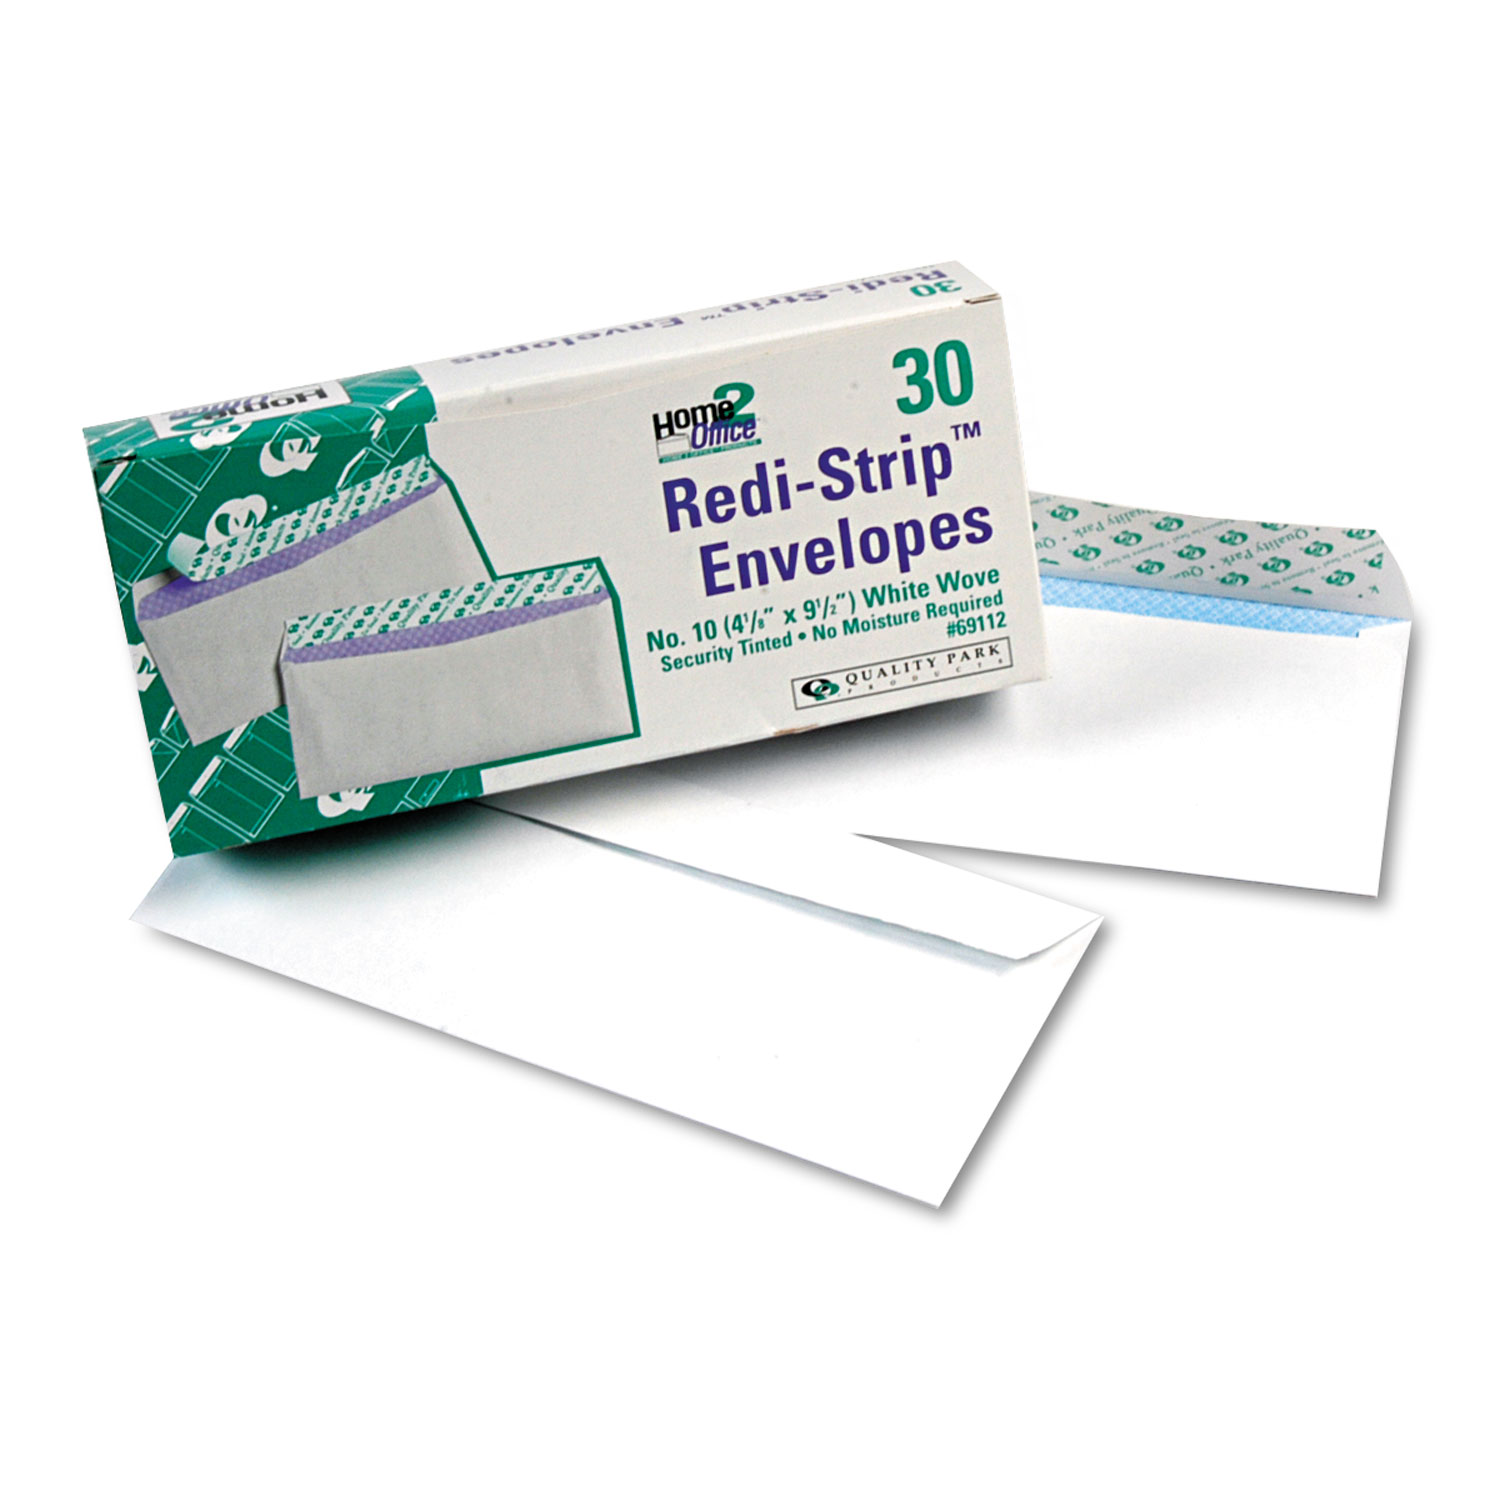  Quality Park QUA69112 Redi-Strip Security Tinted Envelope, #10, Commercial Flap, Redi-Strip Closure, 4.13 x 9.5, White, 30/Box (QUA69112) 